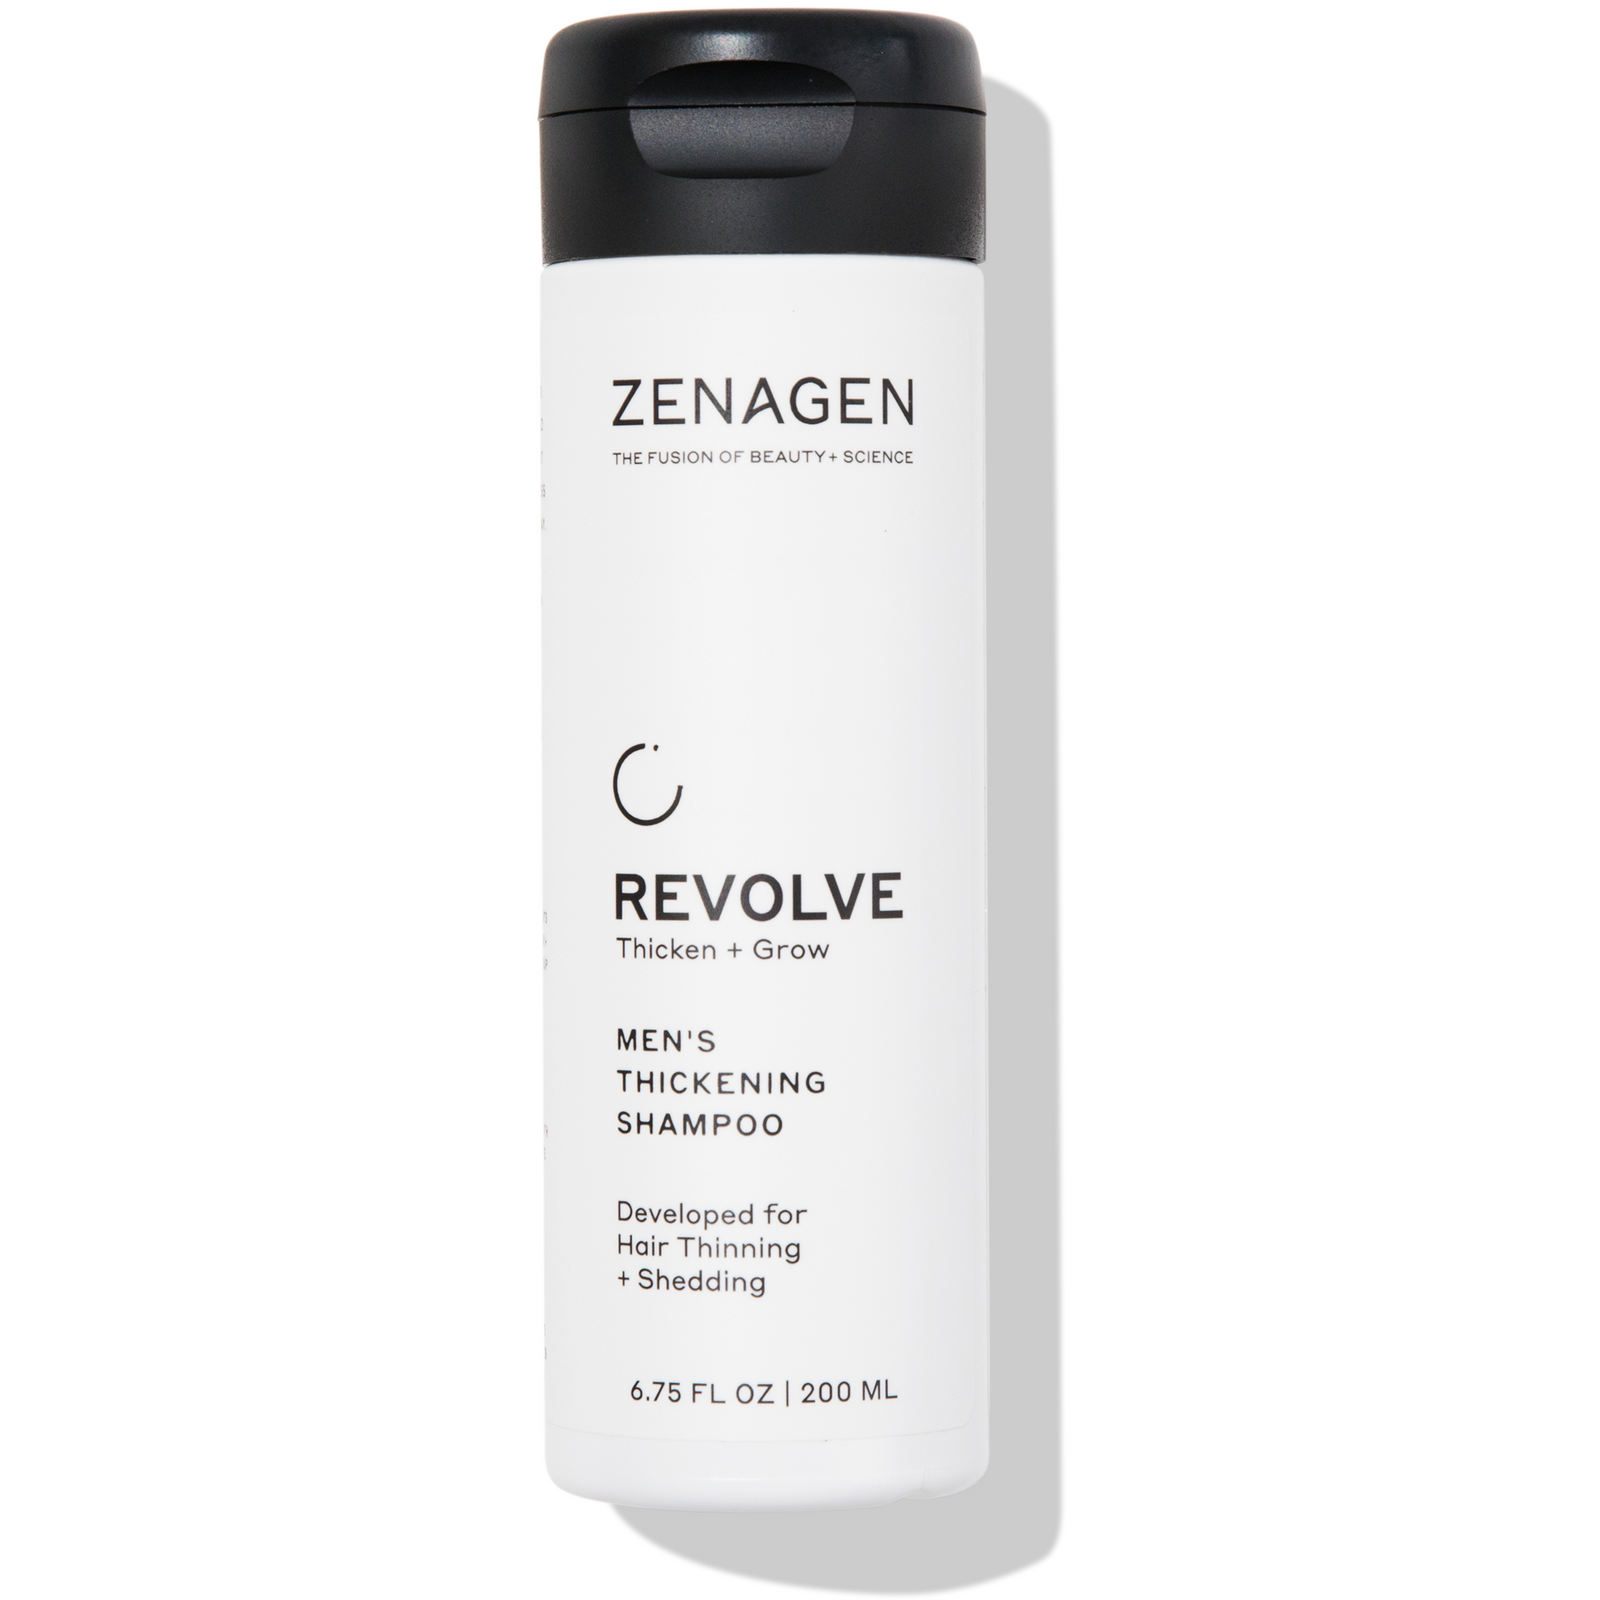 Zenagen Revolve Thickening Hair Loss Shampoo for Men